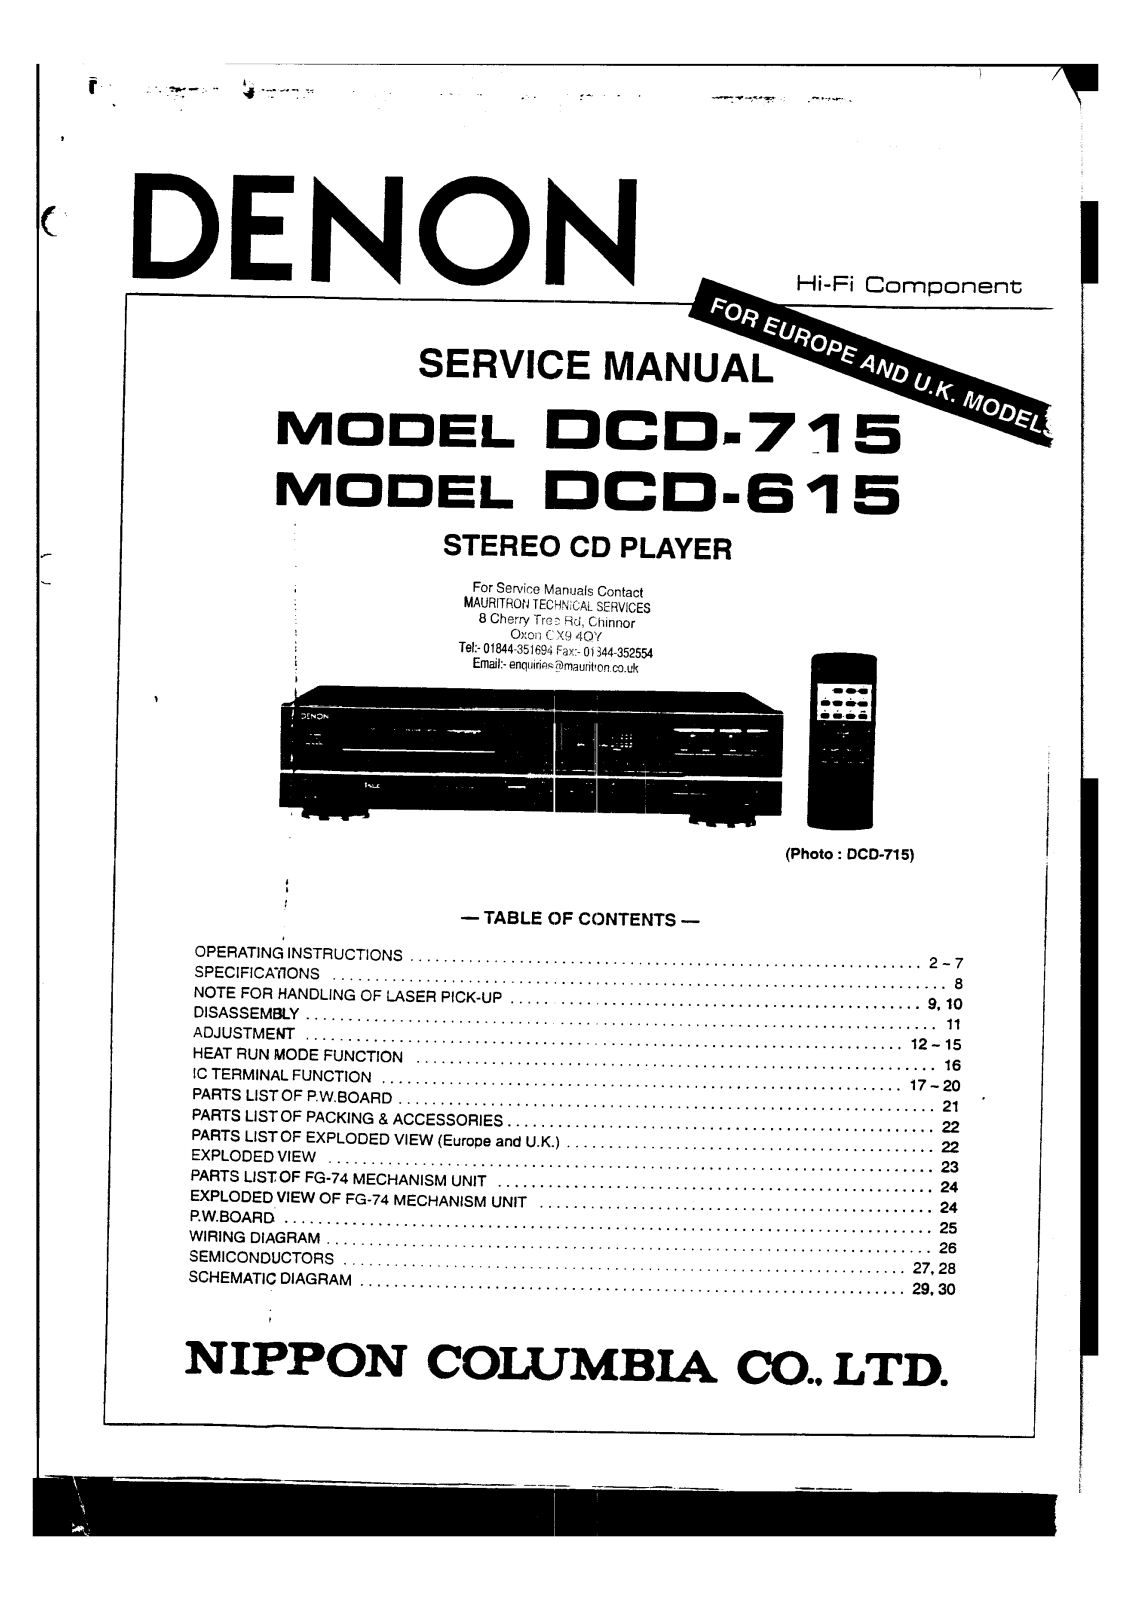 Denon DCD-715, DCD-615 Service Manual